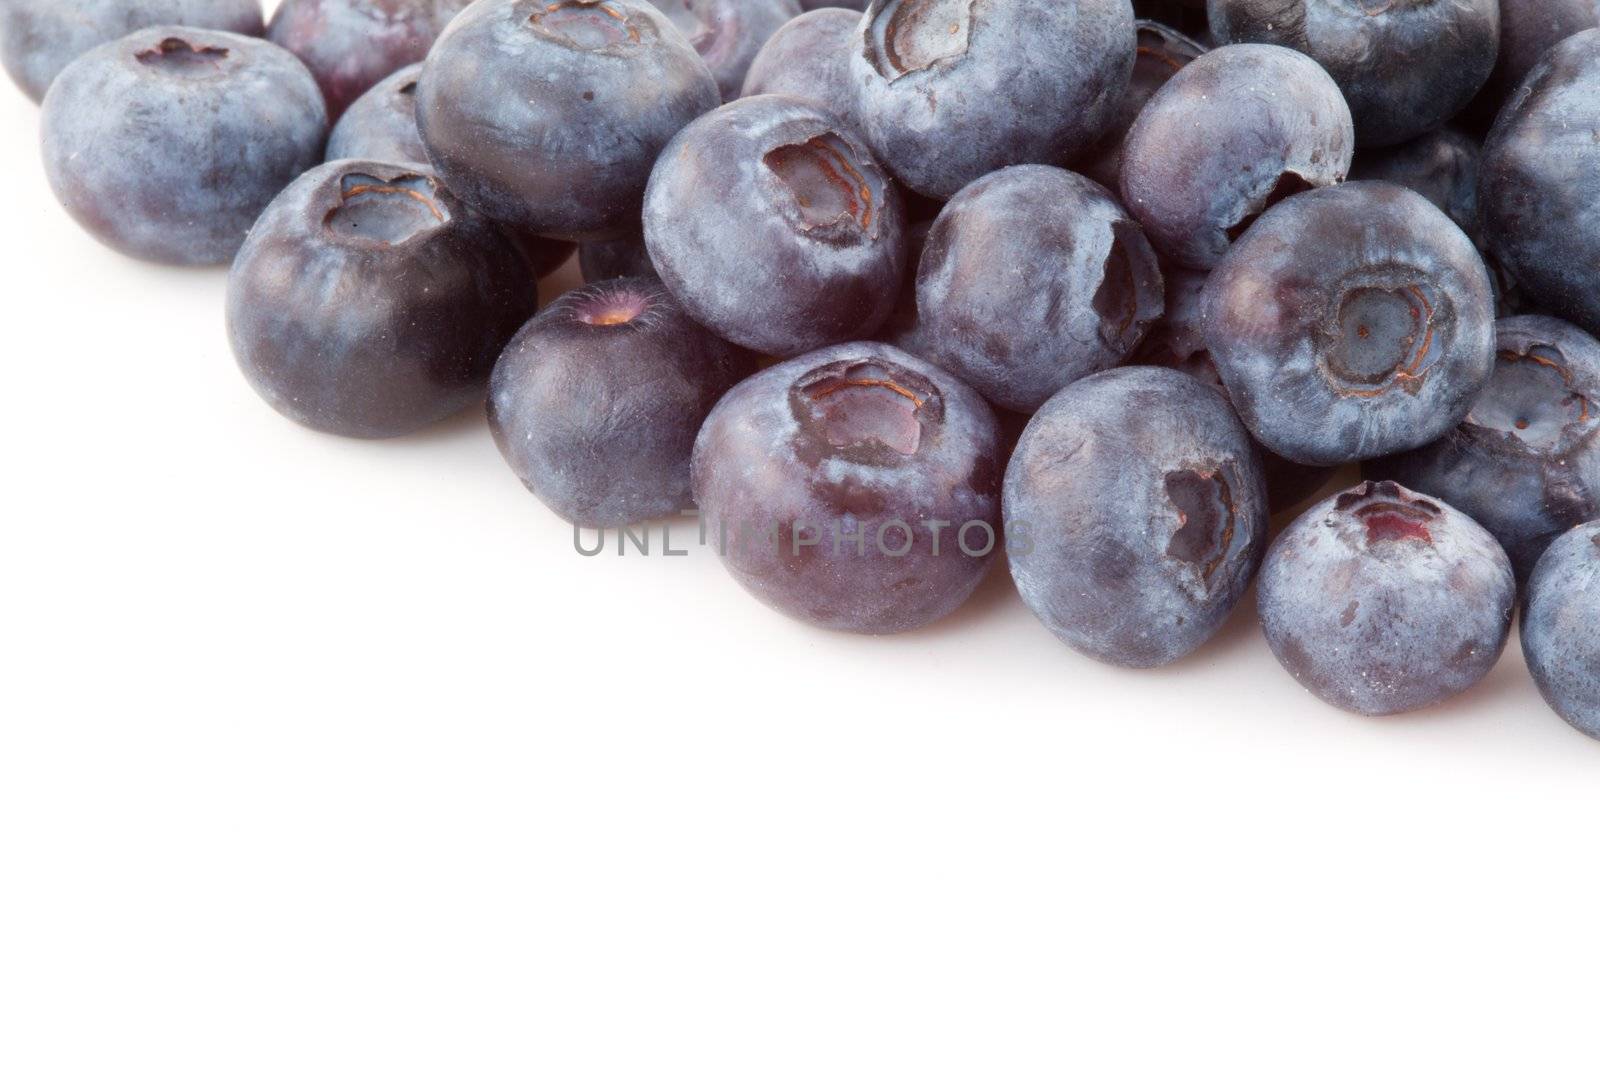 Abundance of blueberries by Wavebreakmedia